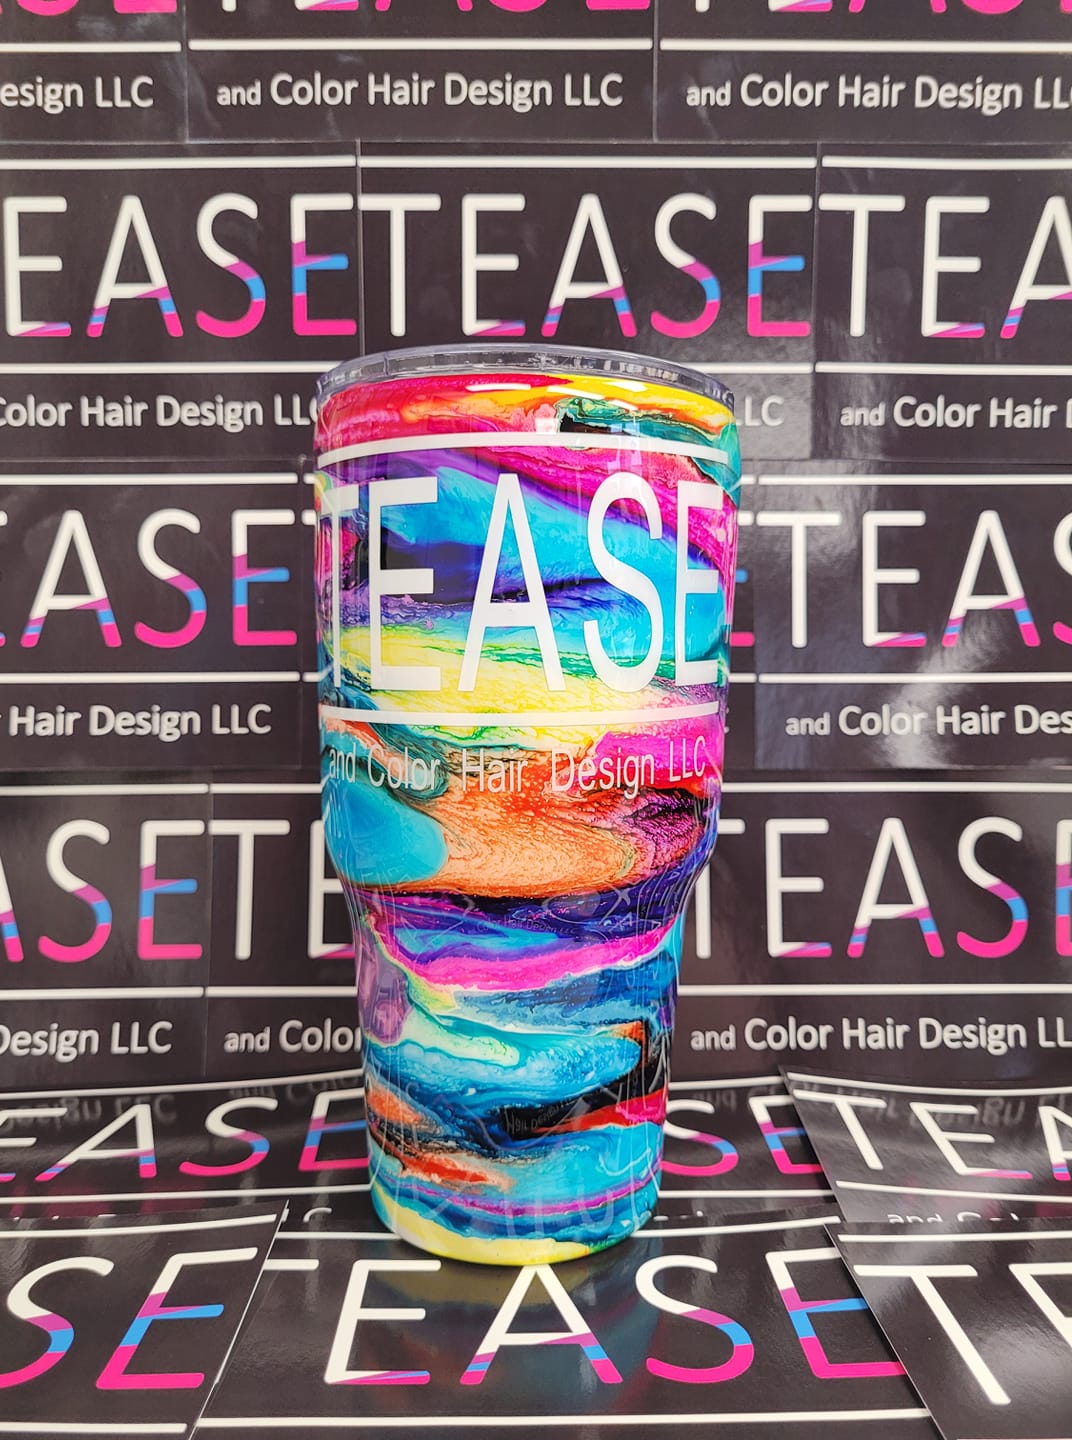 Tease and Color Hair Design LLC 200 Hartzell Dr, Fayetteville Pennsylvania 17222